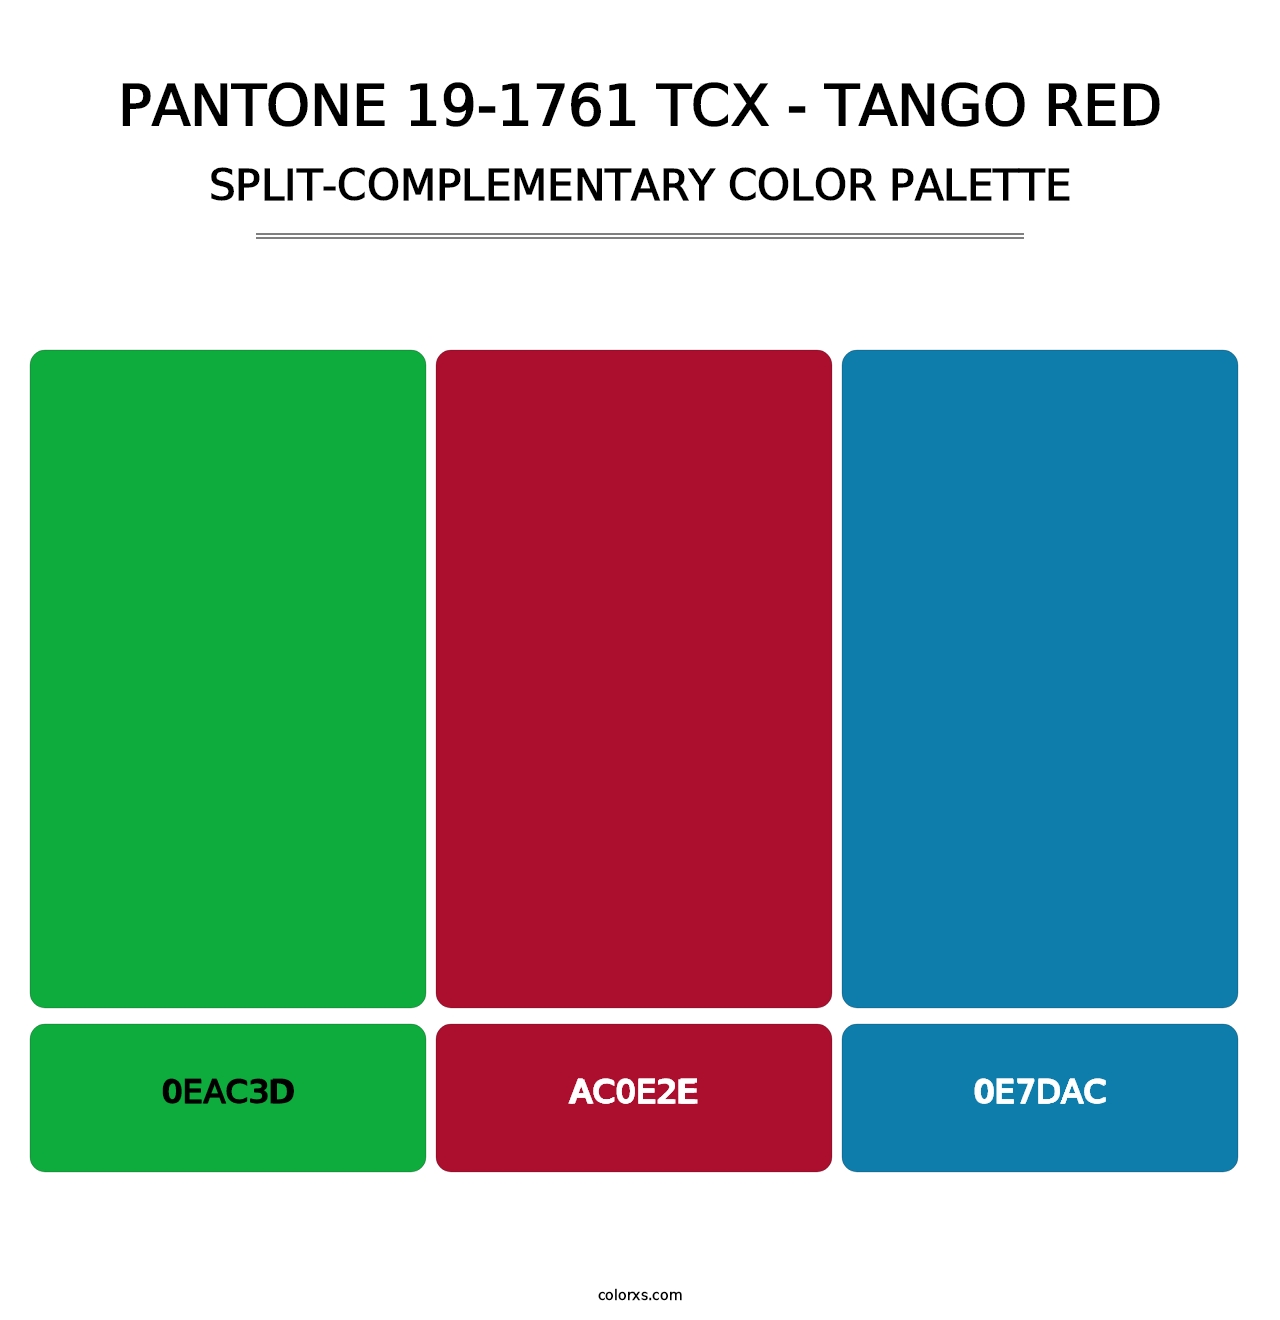 PANTONE 19-1761 TCX - Tango Red - Split-Complementary Color Palette